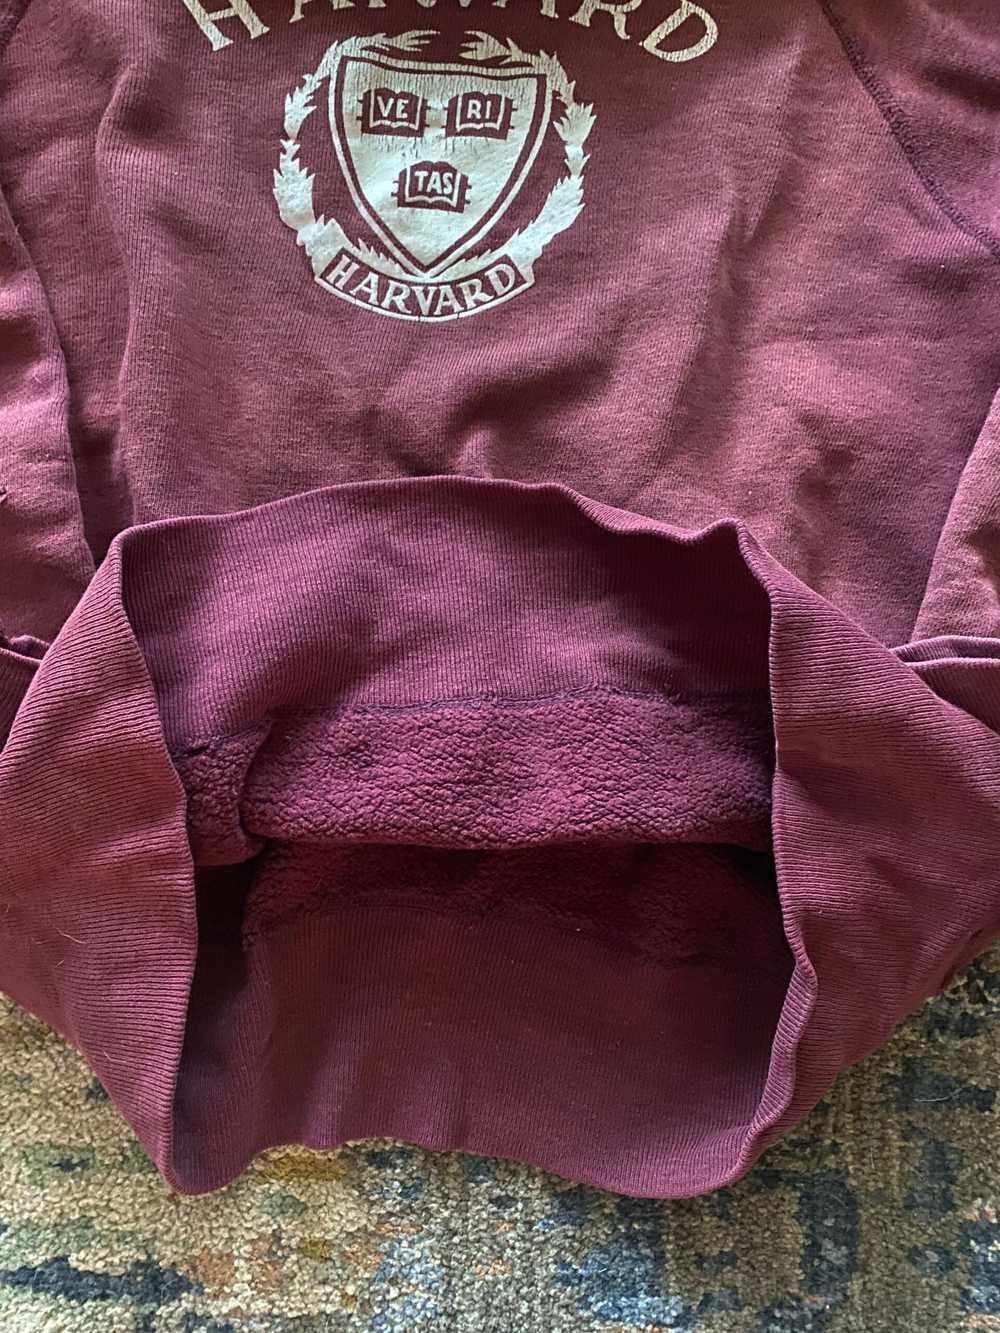 1950’s/60’s maroon Harvard sweatshirt - image 3